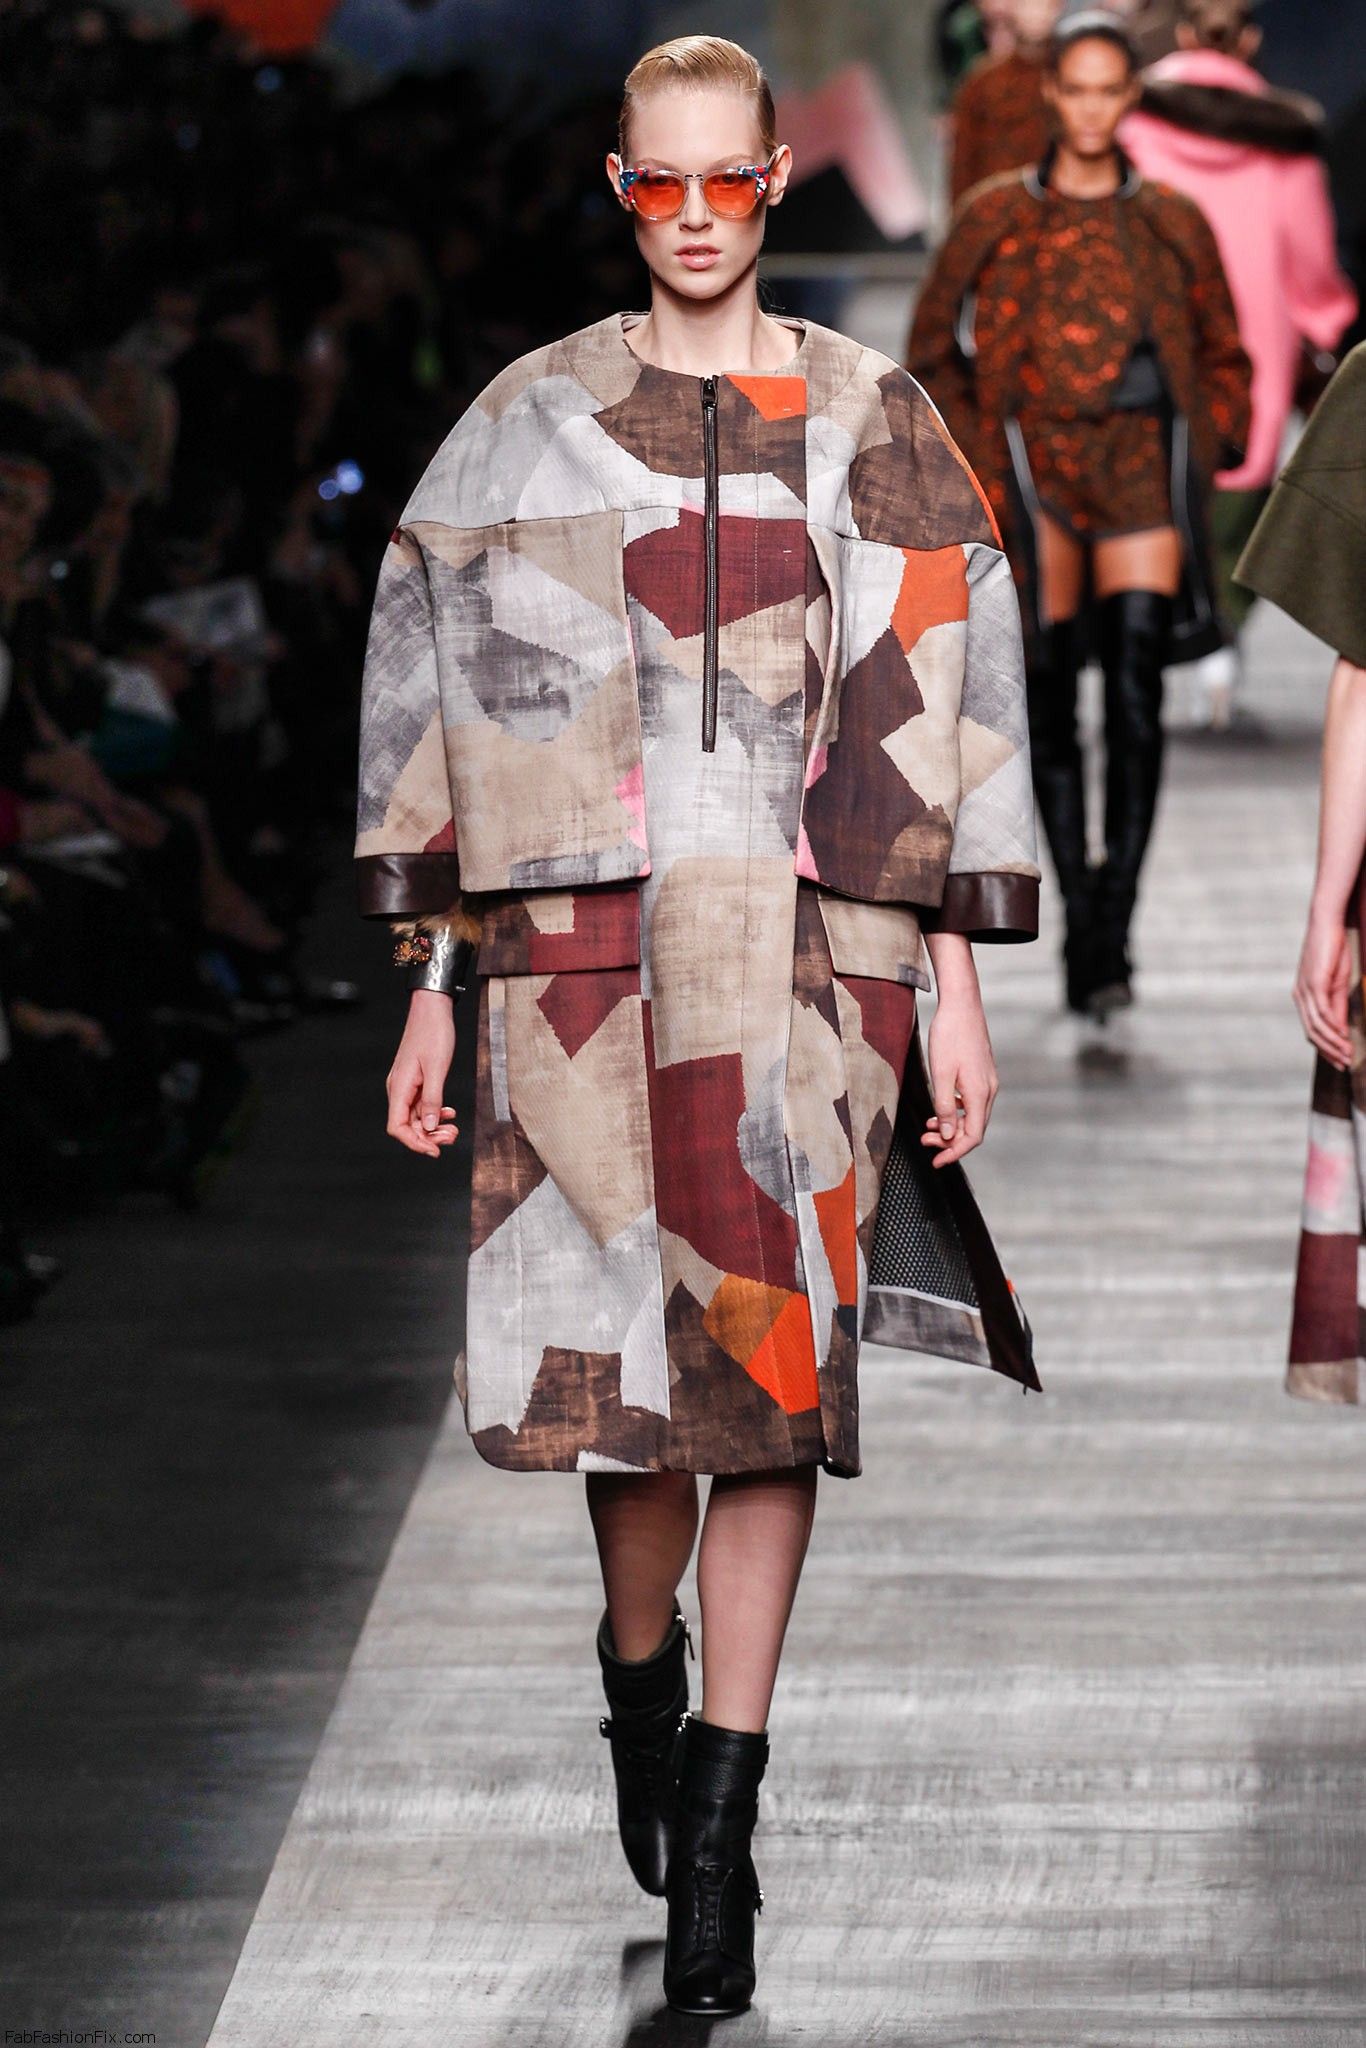 Fendi fall/winter 2014 collection – Milan fashion week | Fab Fashion Fix